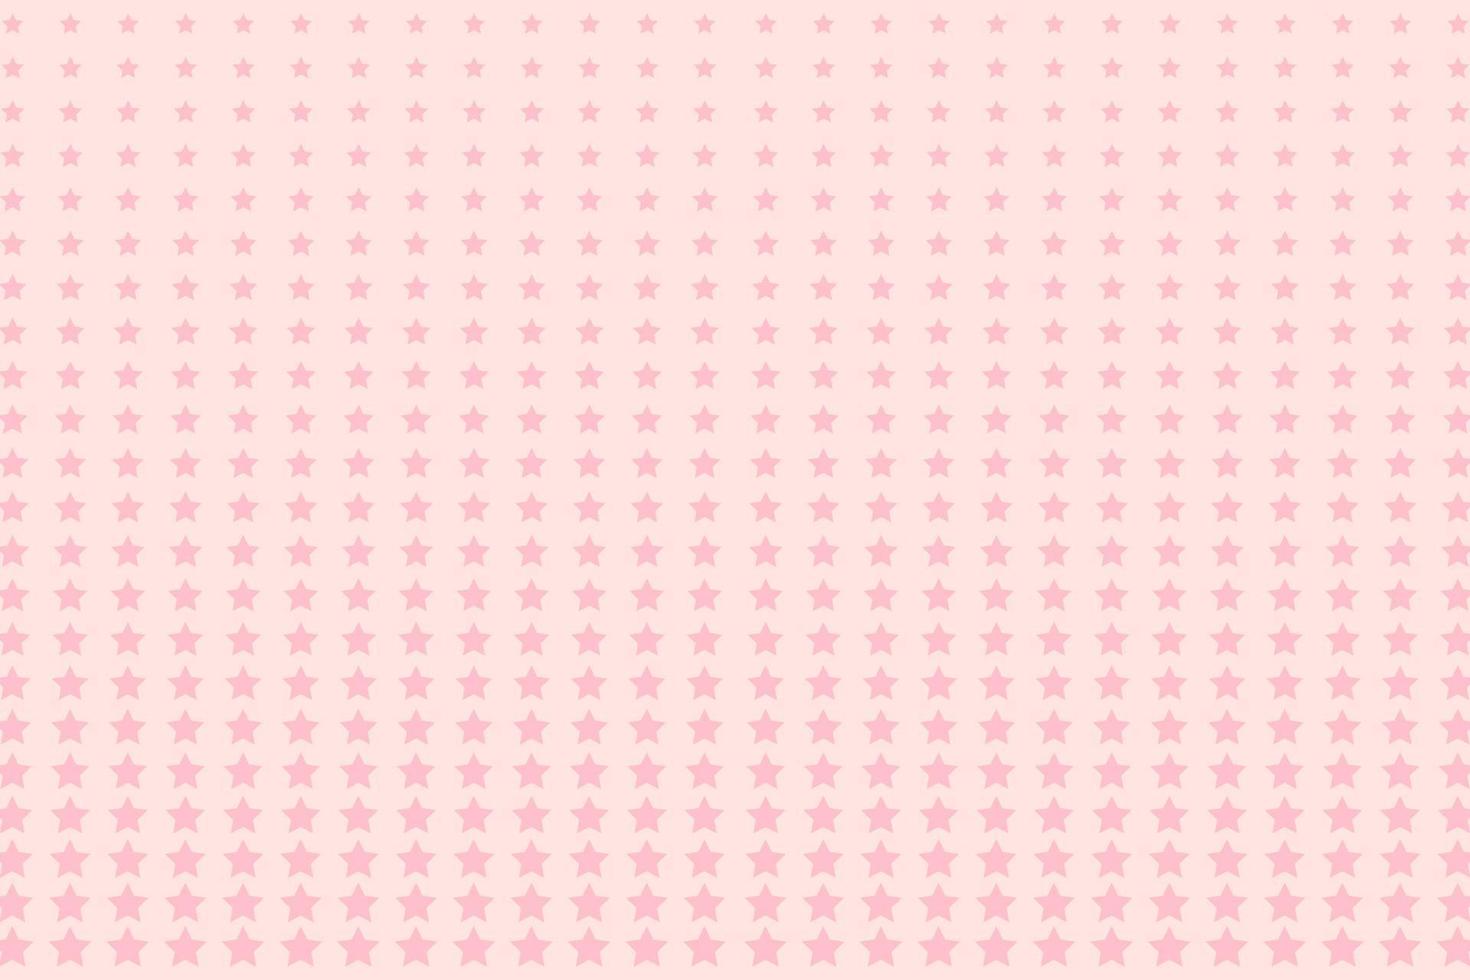 Pink pop art background with halftone stars. Vector illustration.